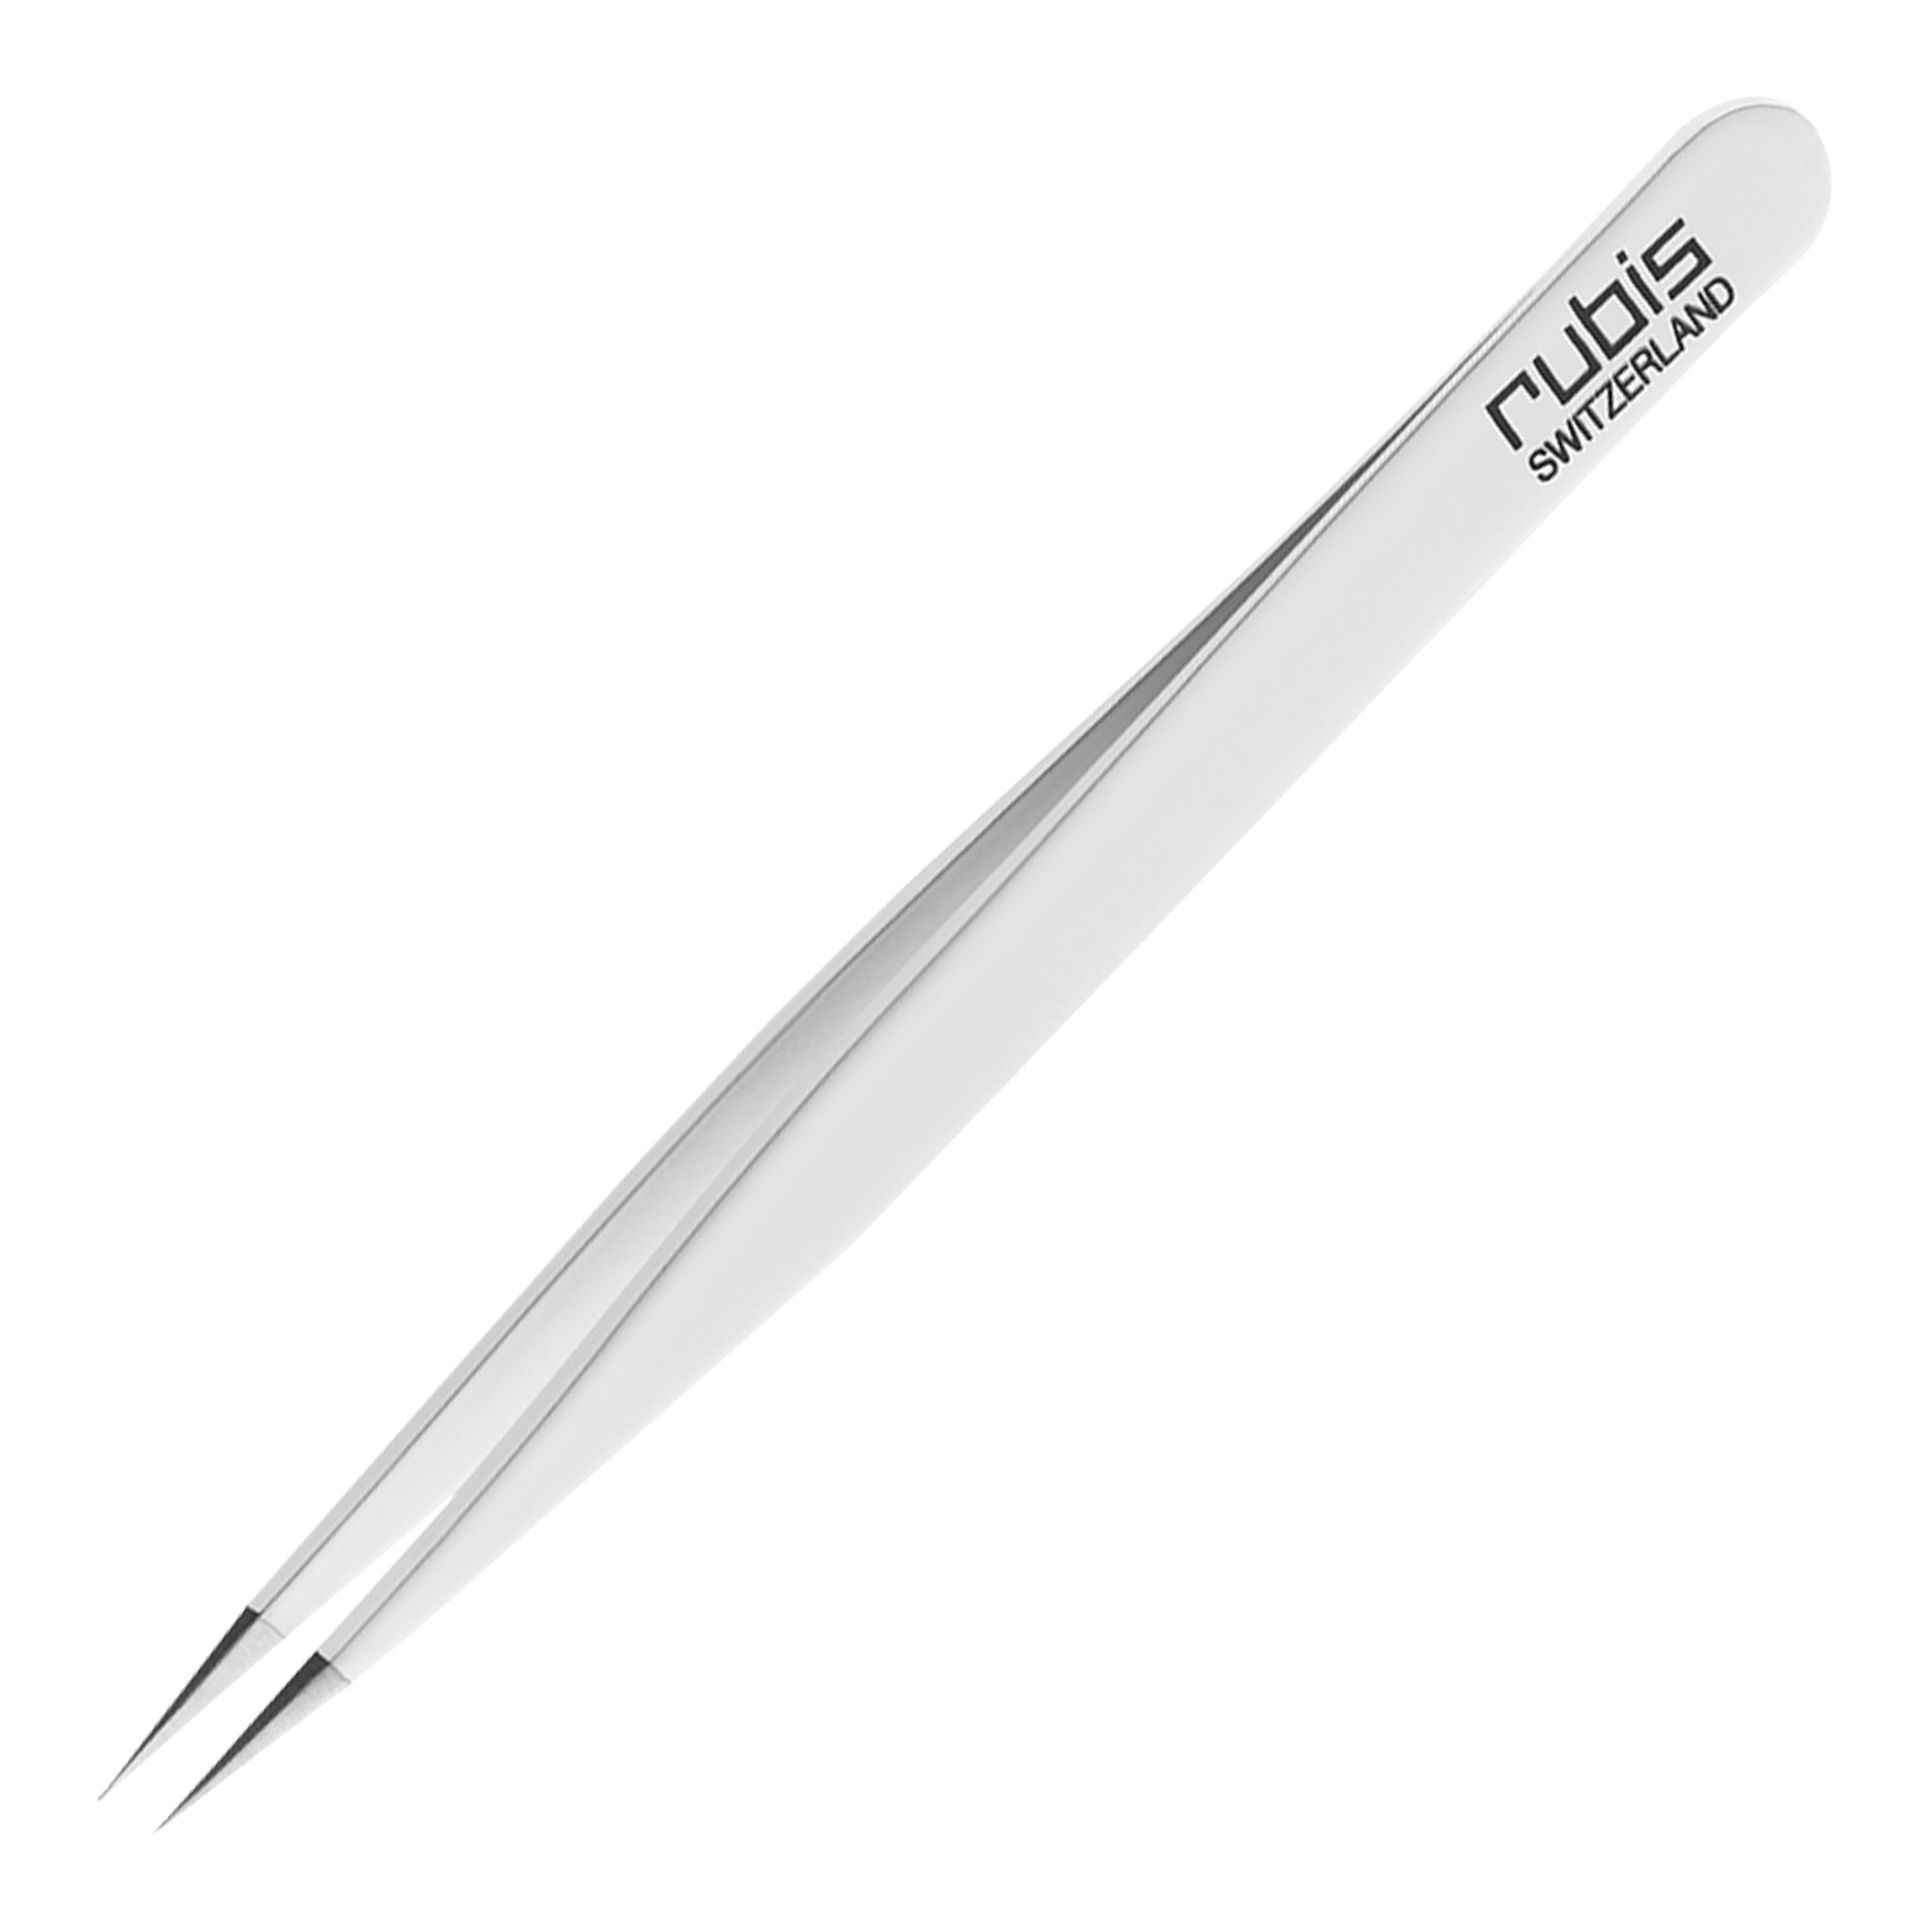 Rubis sharp-tipped stainless steel tweezers white